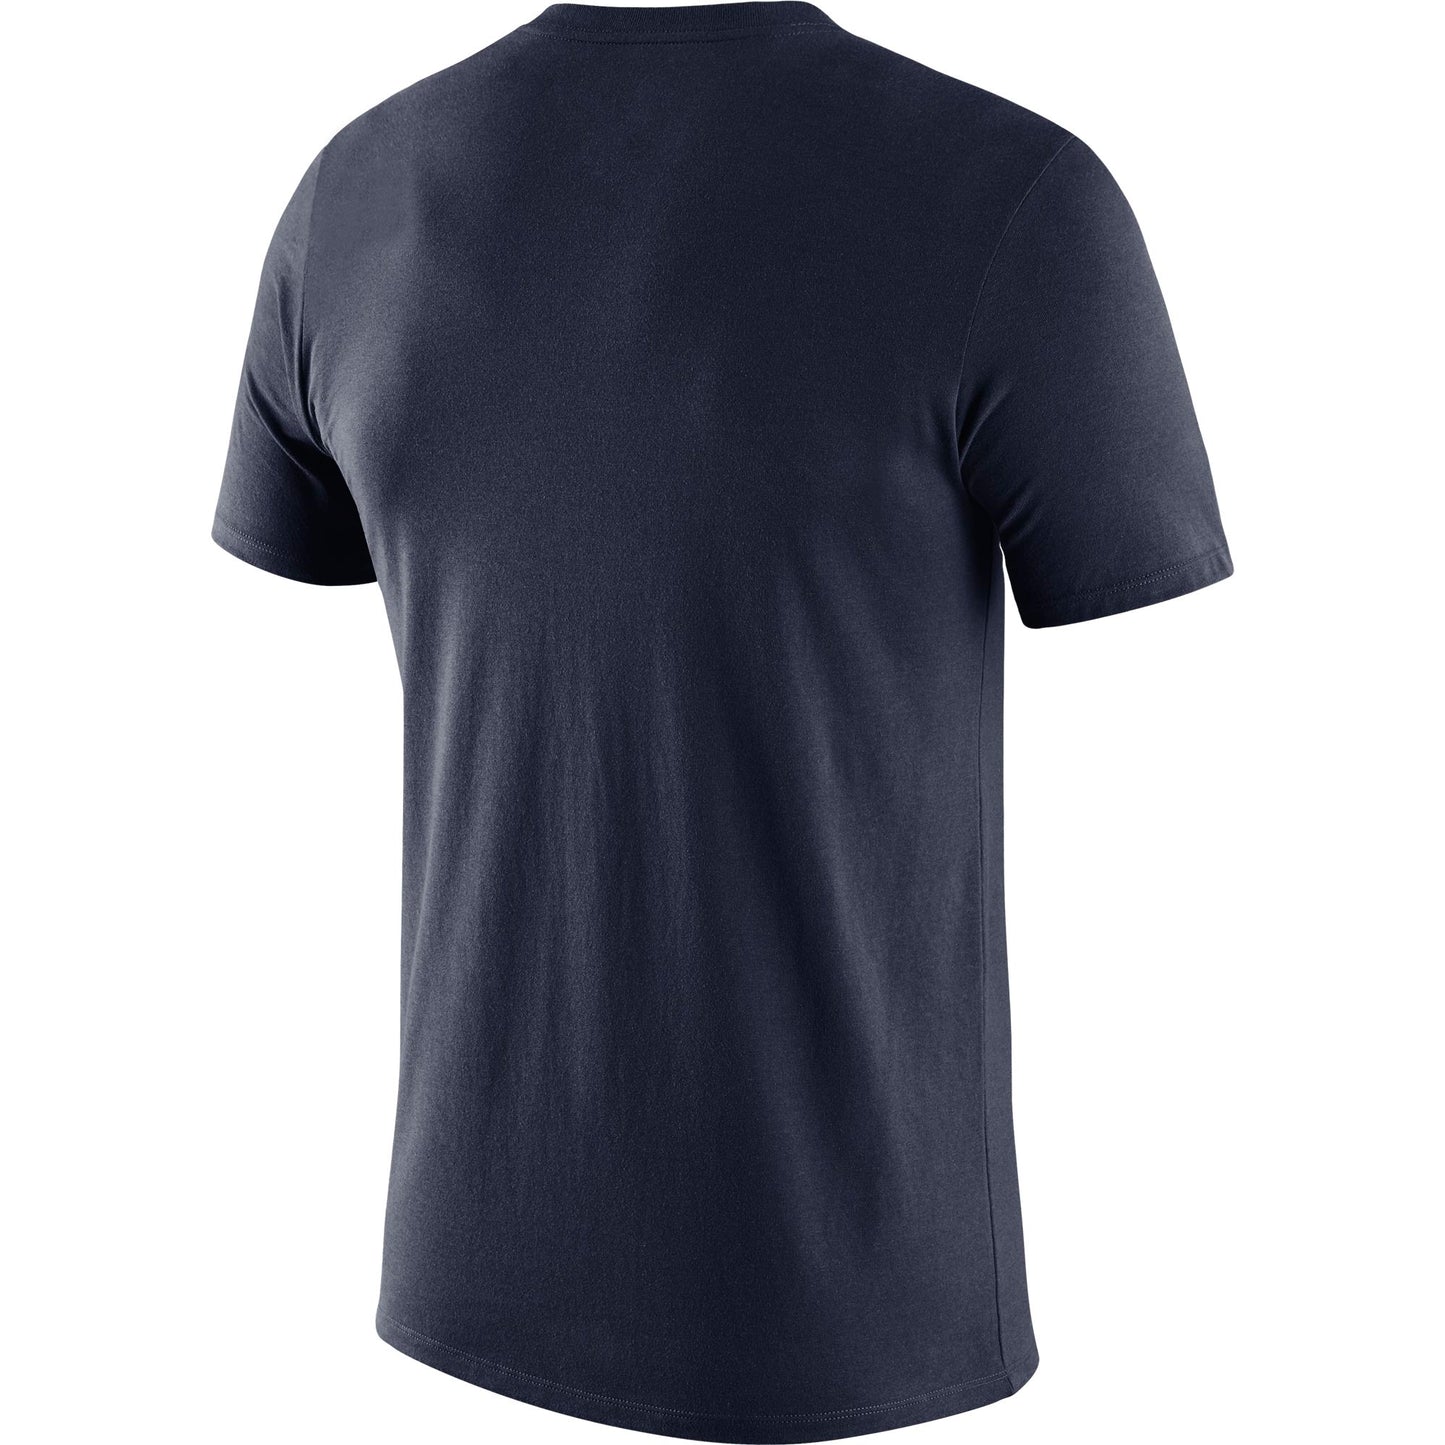 Men's Penn State Nittany Lions Nike Essential Wordmark T-Shirt – Navy